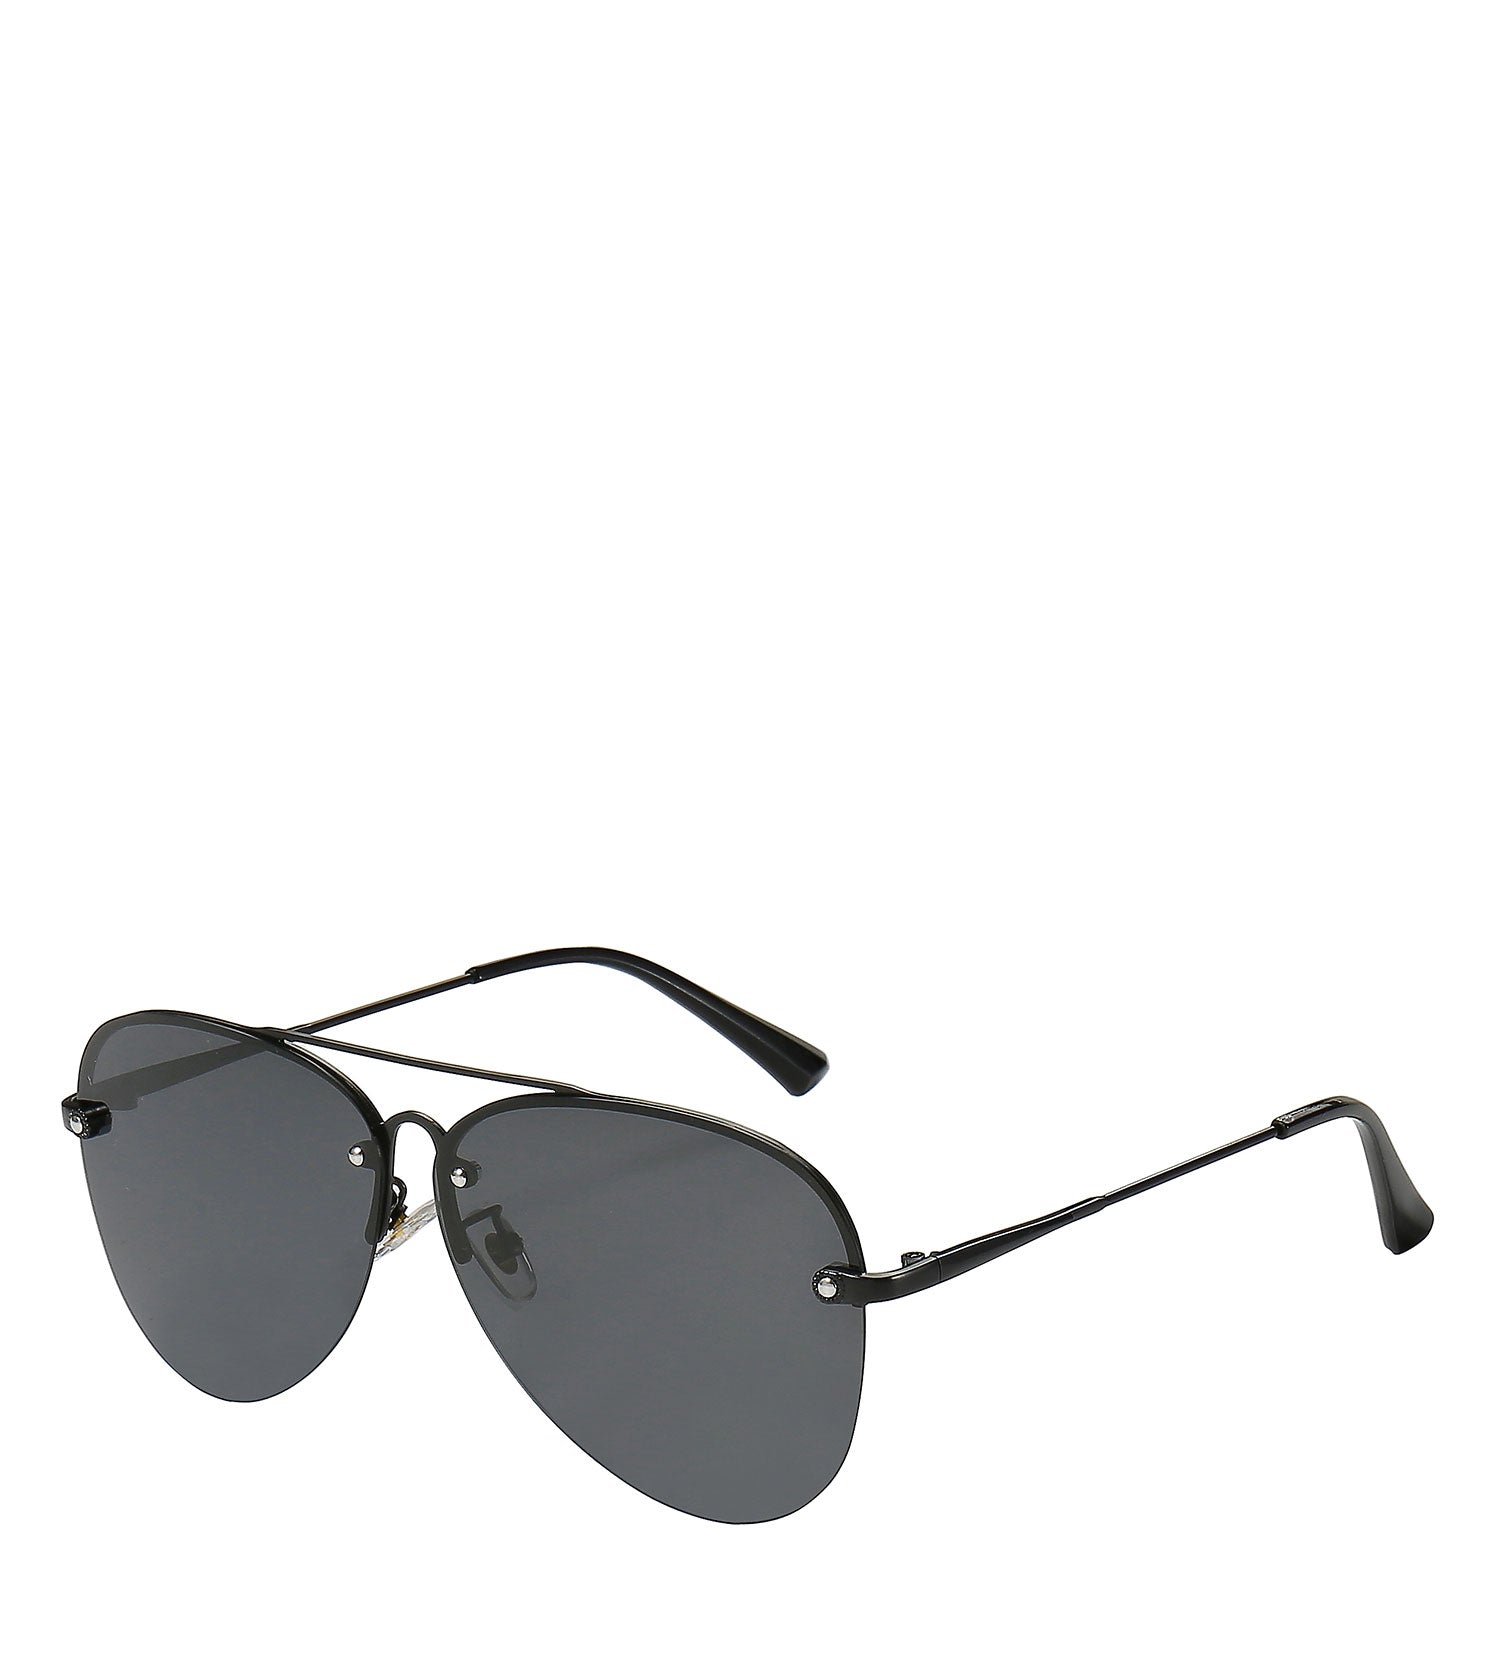 TARRAMARRA Fashion Aviator Polarised Sunglasses-Sunglasses-PEROZ Accessories